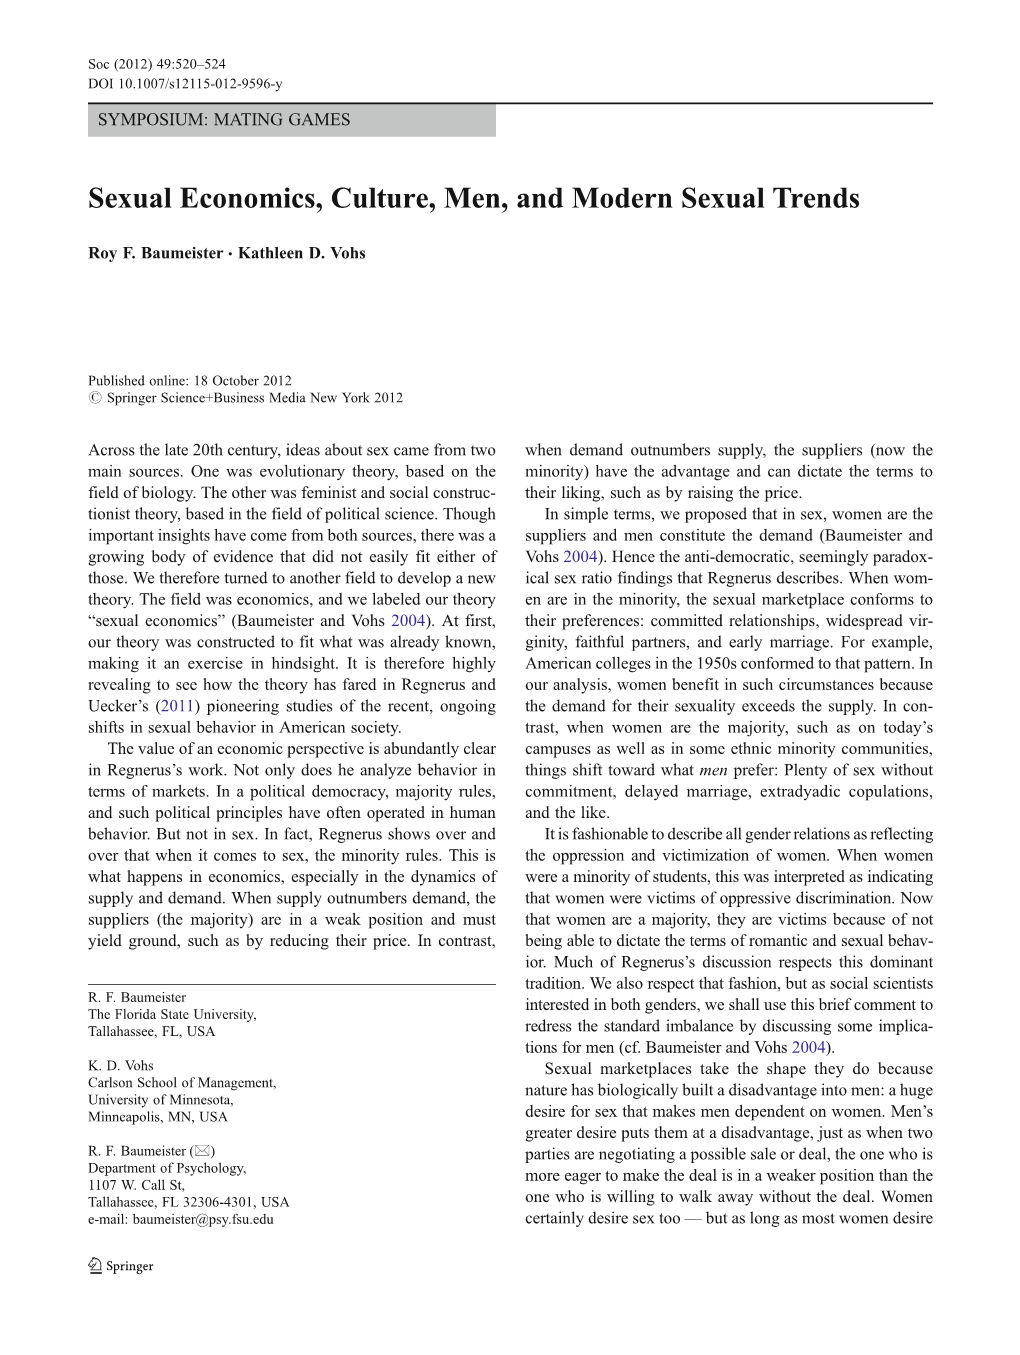 Sexual Economics, Culture, Men, and Modern Sexual Trends